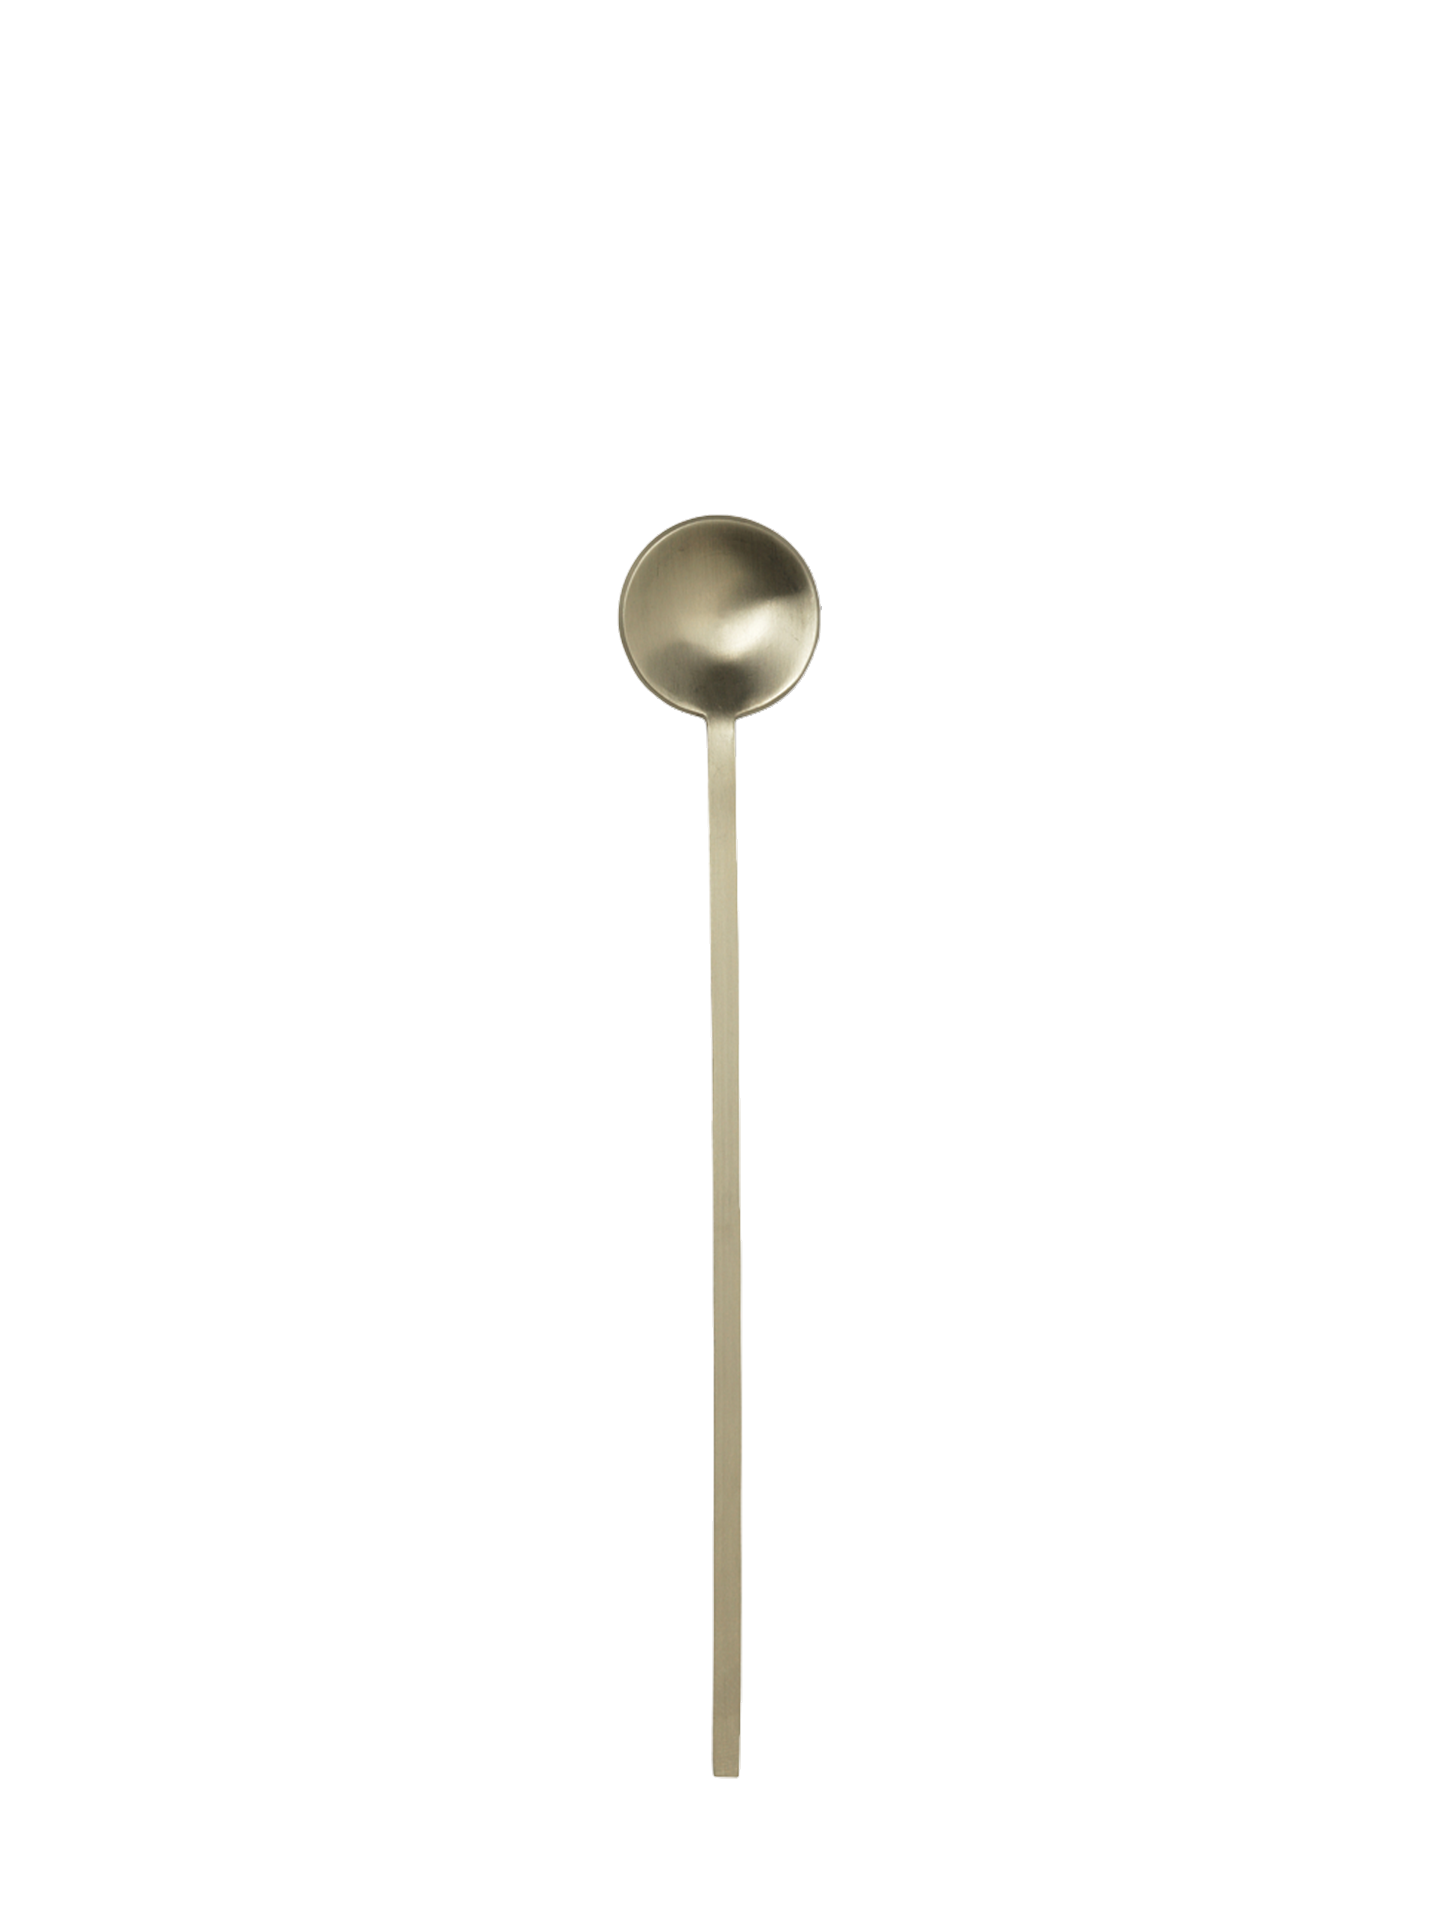 Fein Brass Spoon, long or small